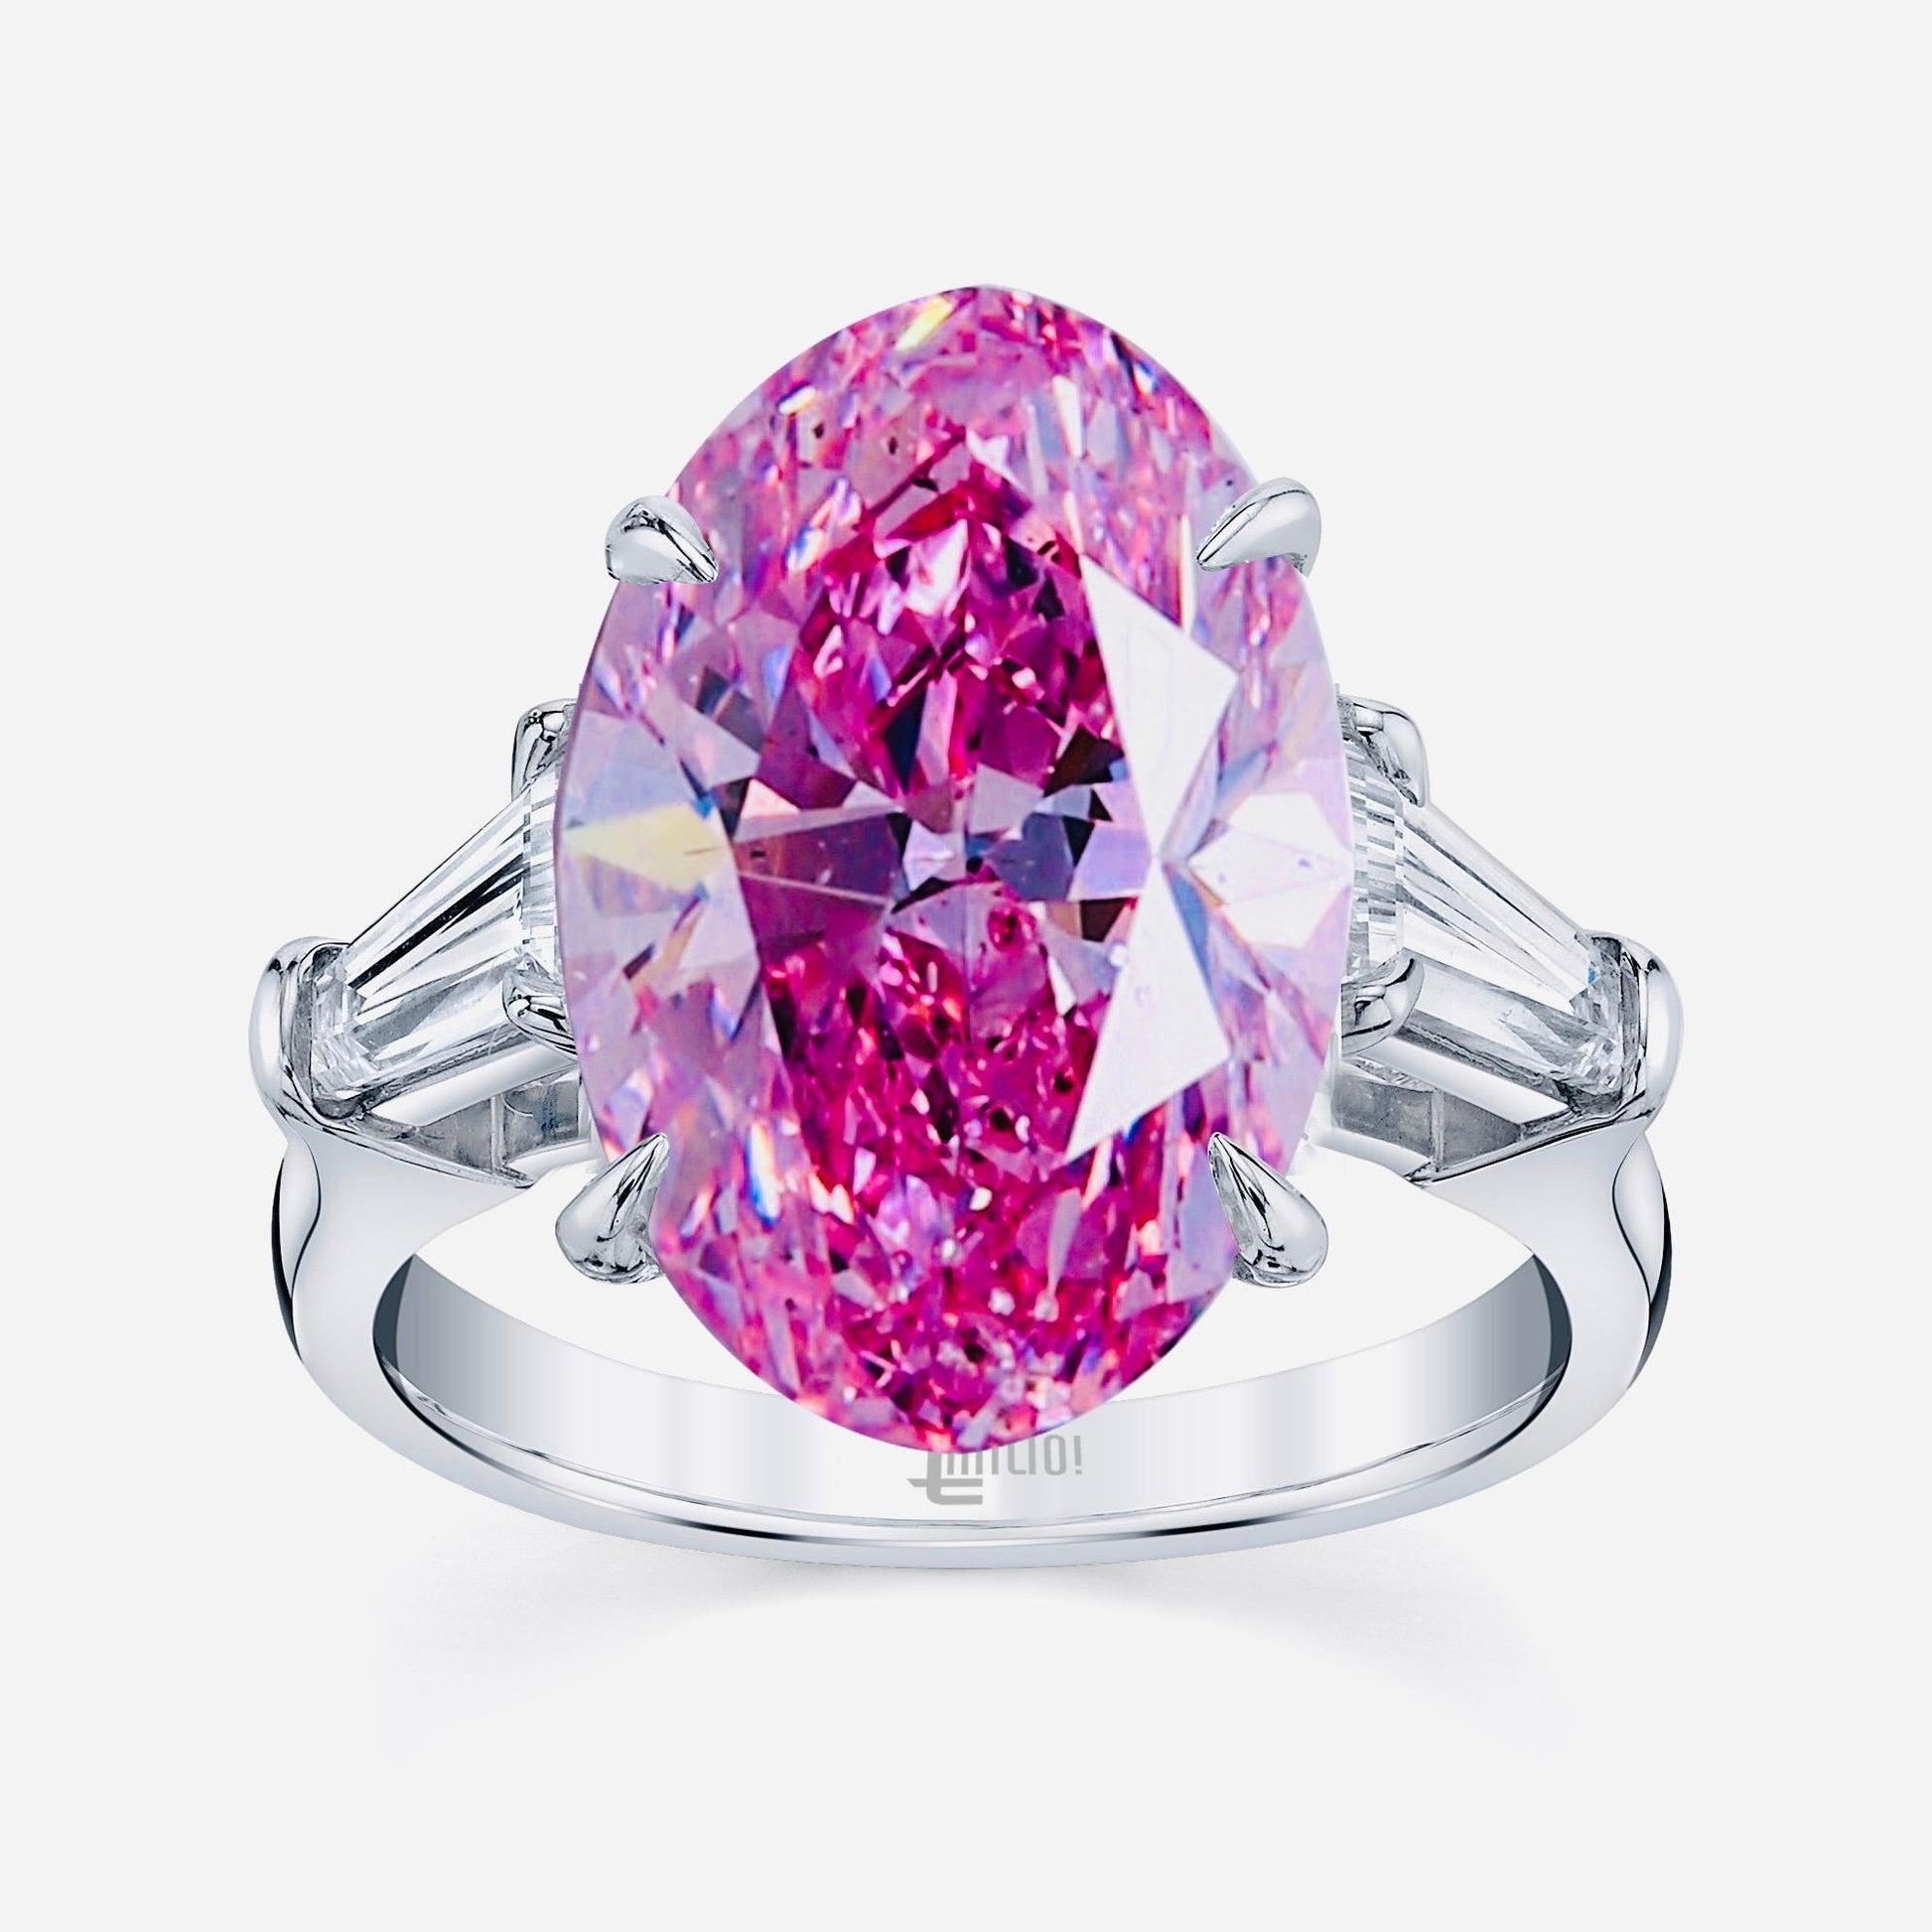 Emilio Jewelry Gia Certified 2.00 Carat Vivid Pink Diamond Ring